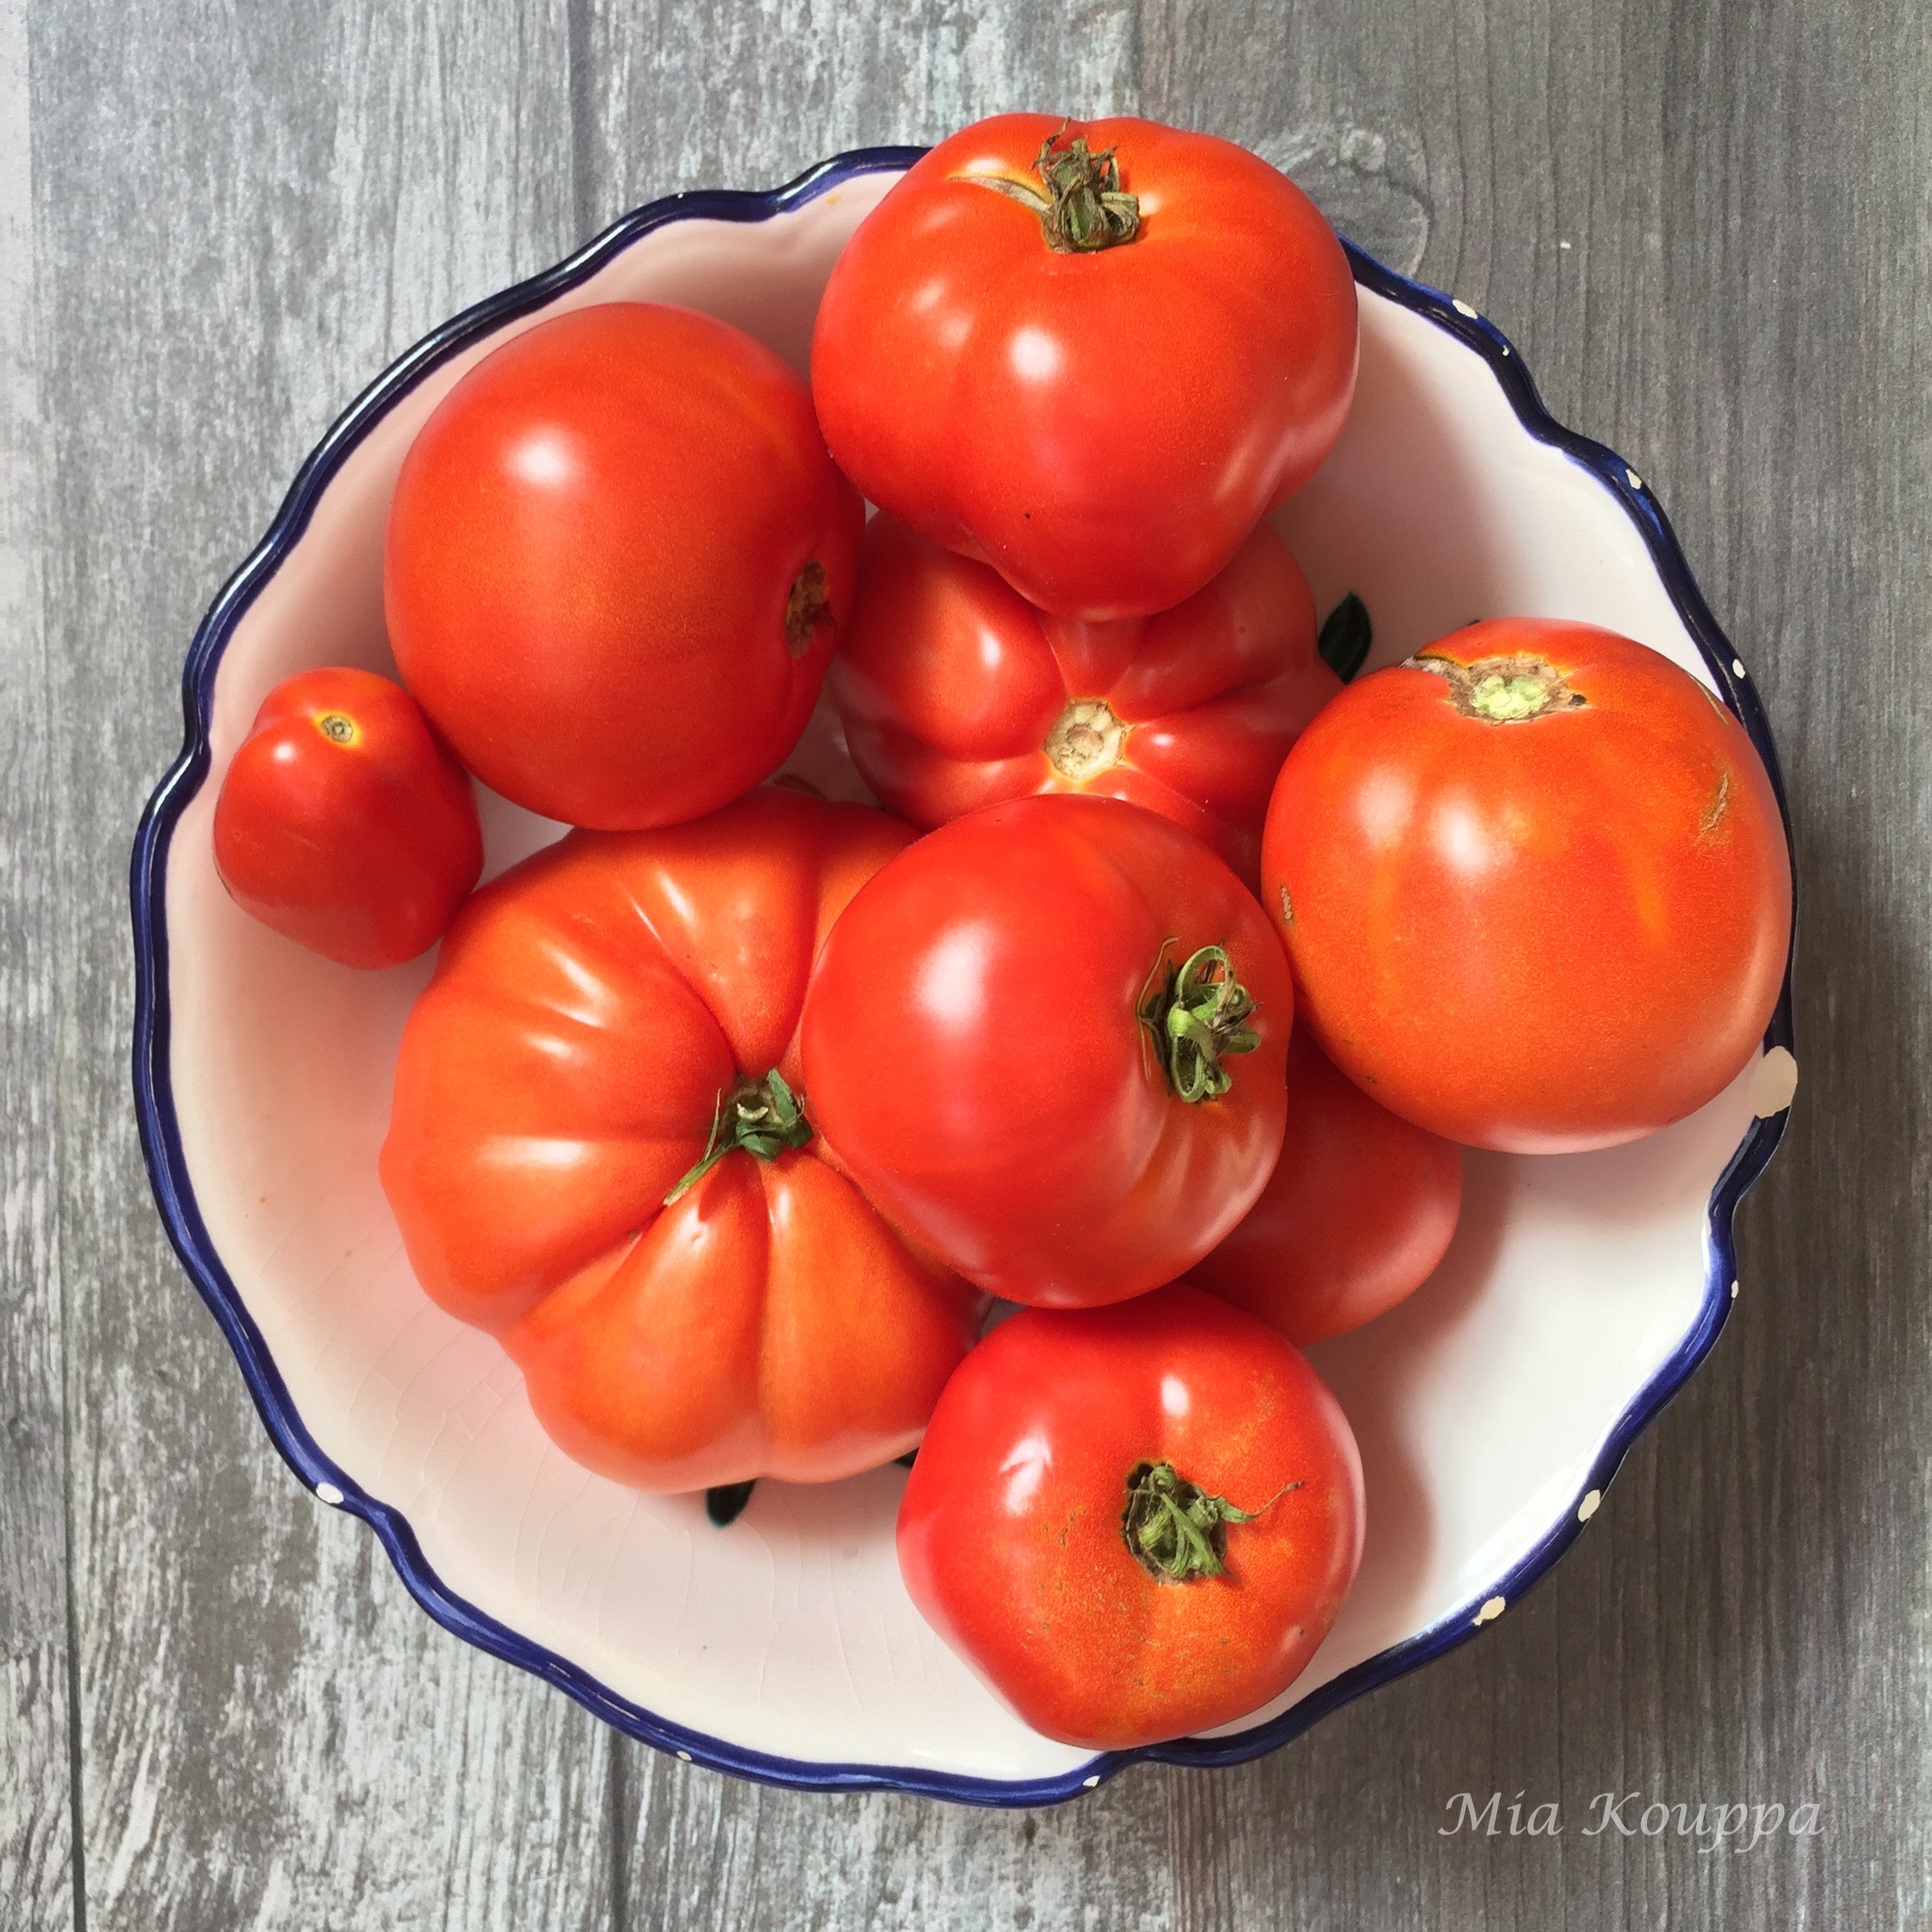 Garden fresh tomatoes